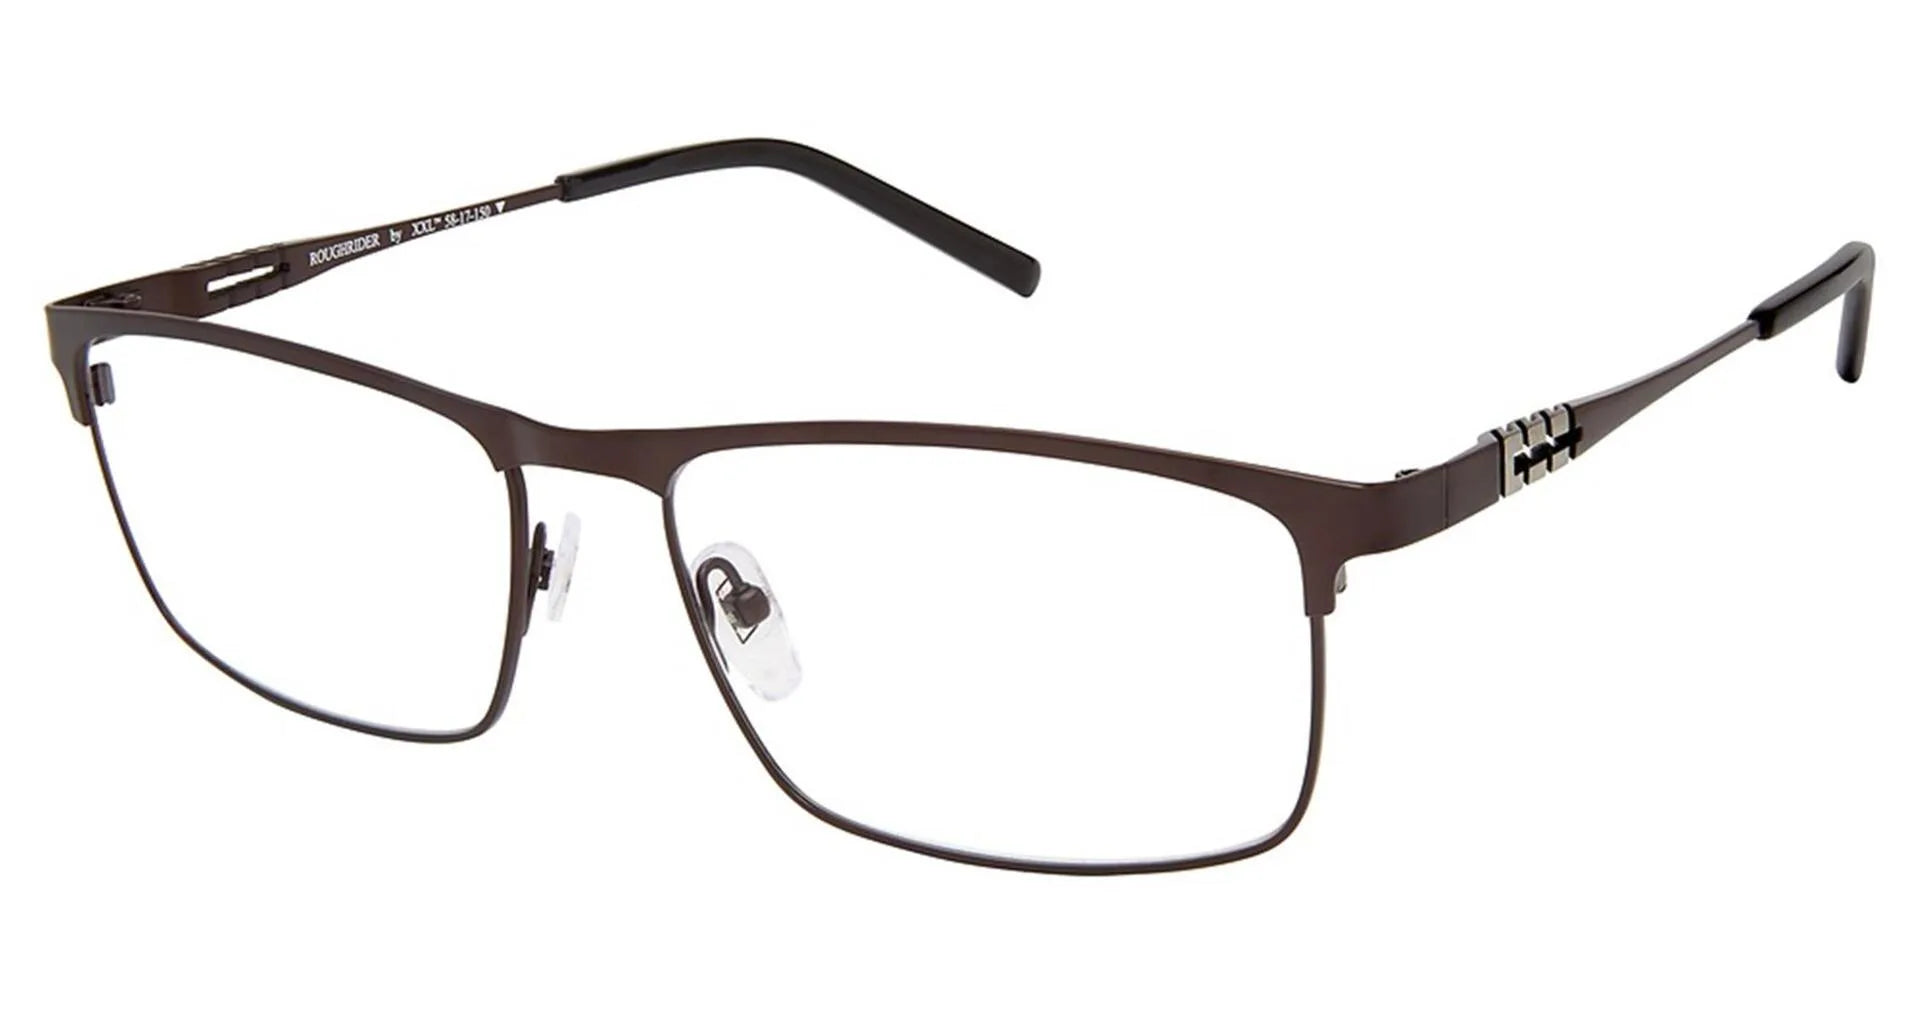 XXL Eyewear Roughrider Eyeglasses Brown